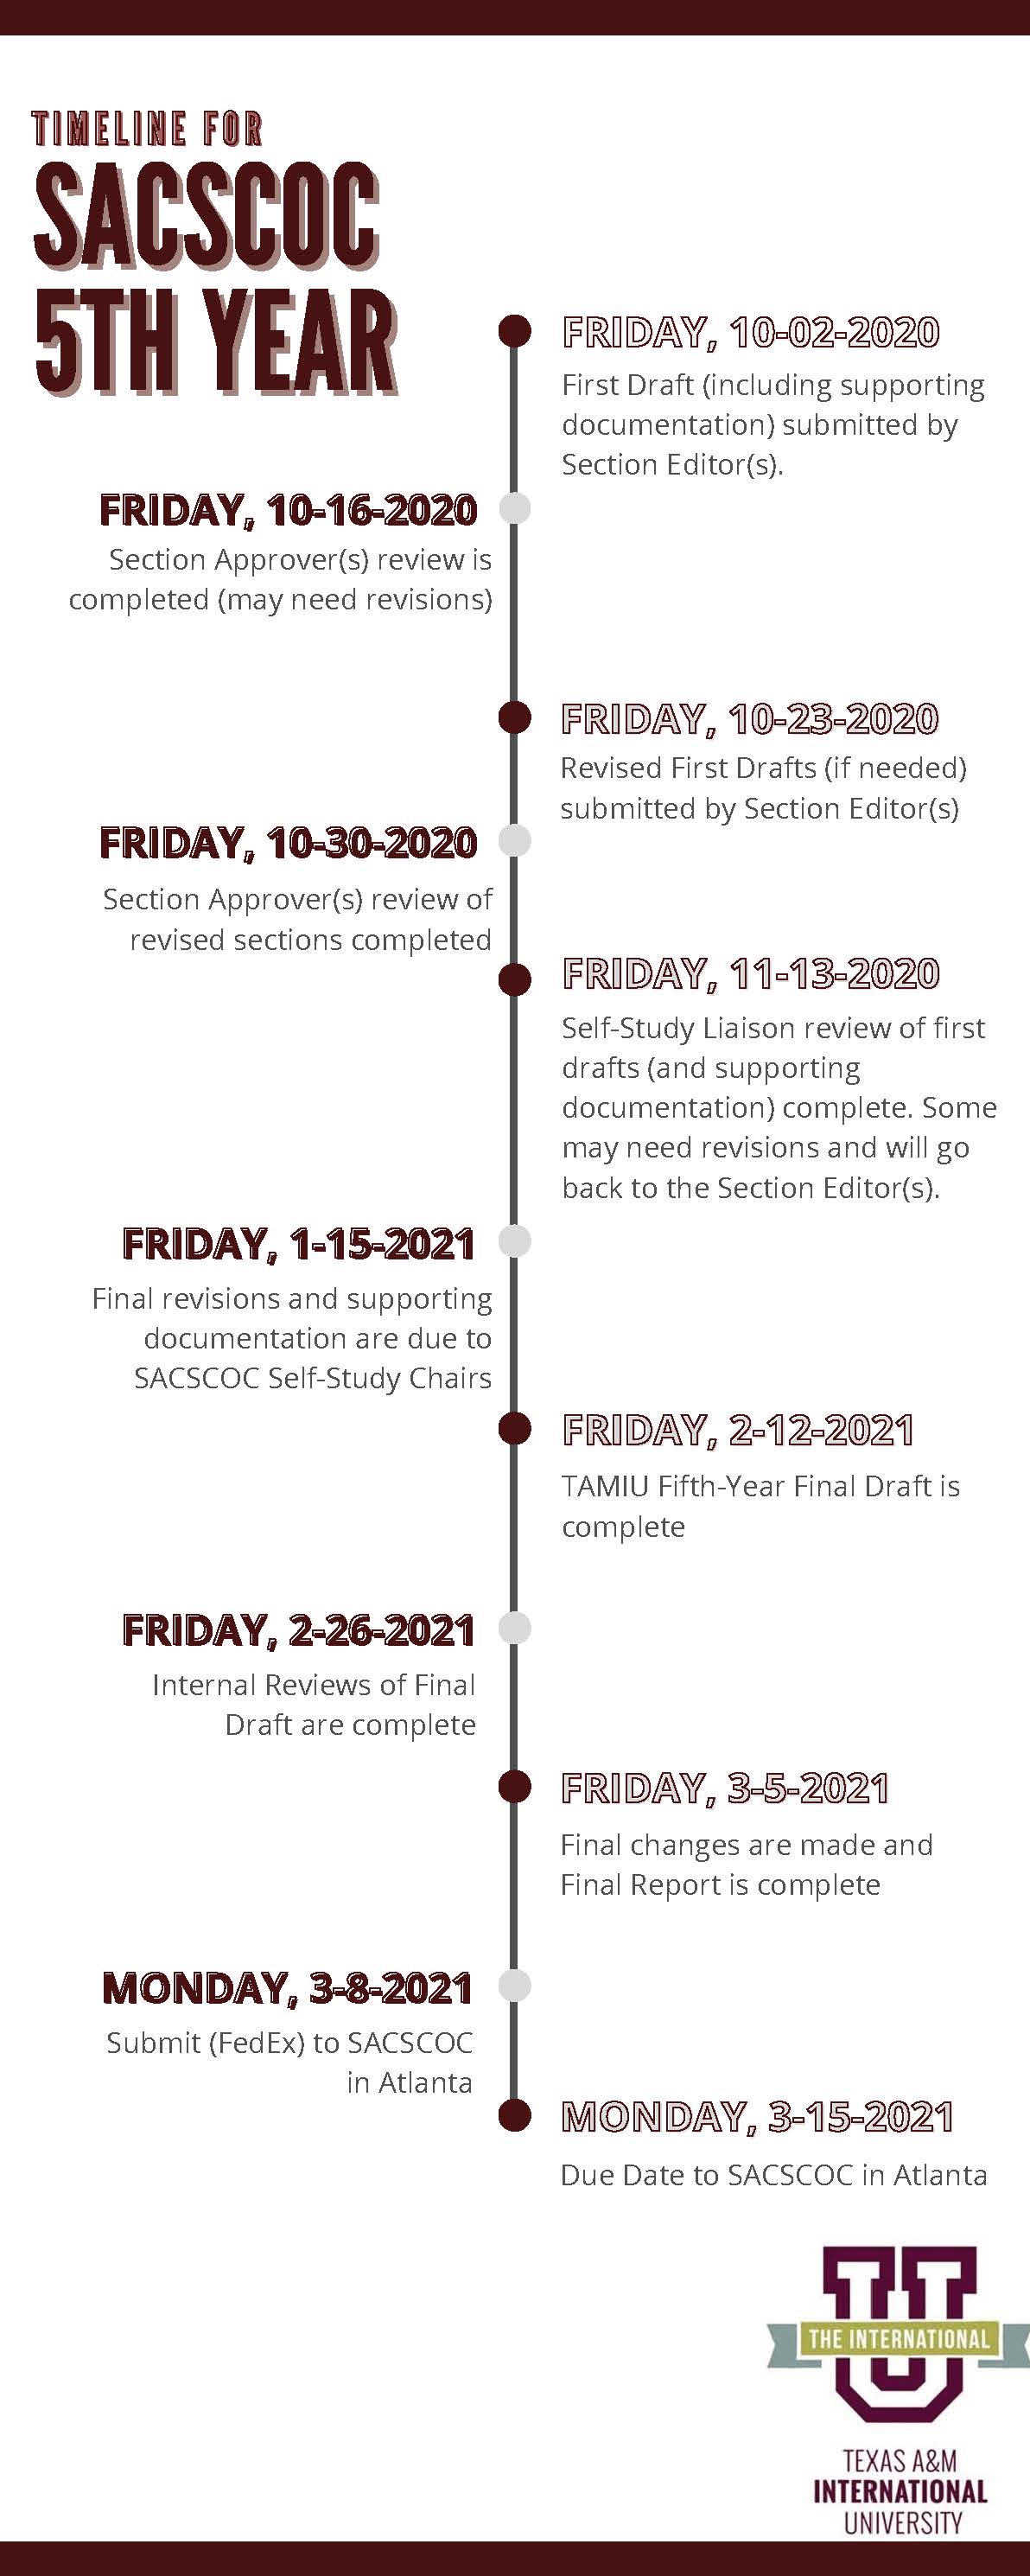 SACSCOC Timeline Image